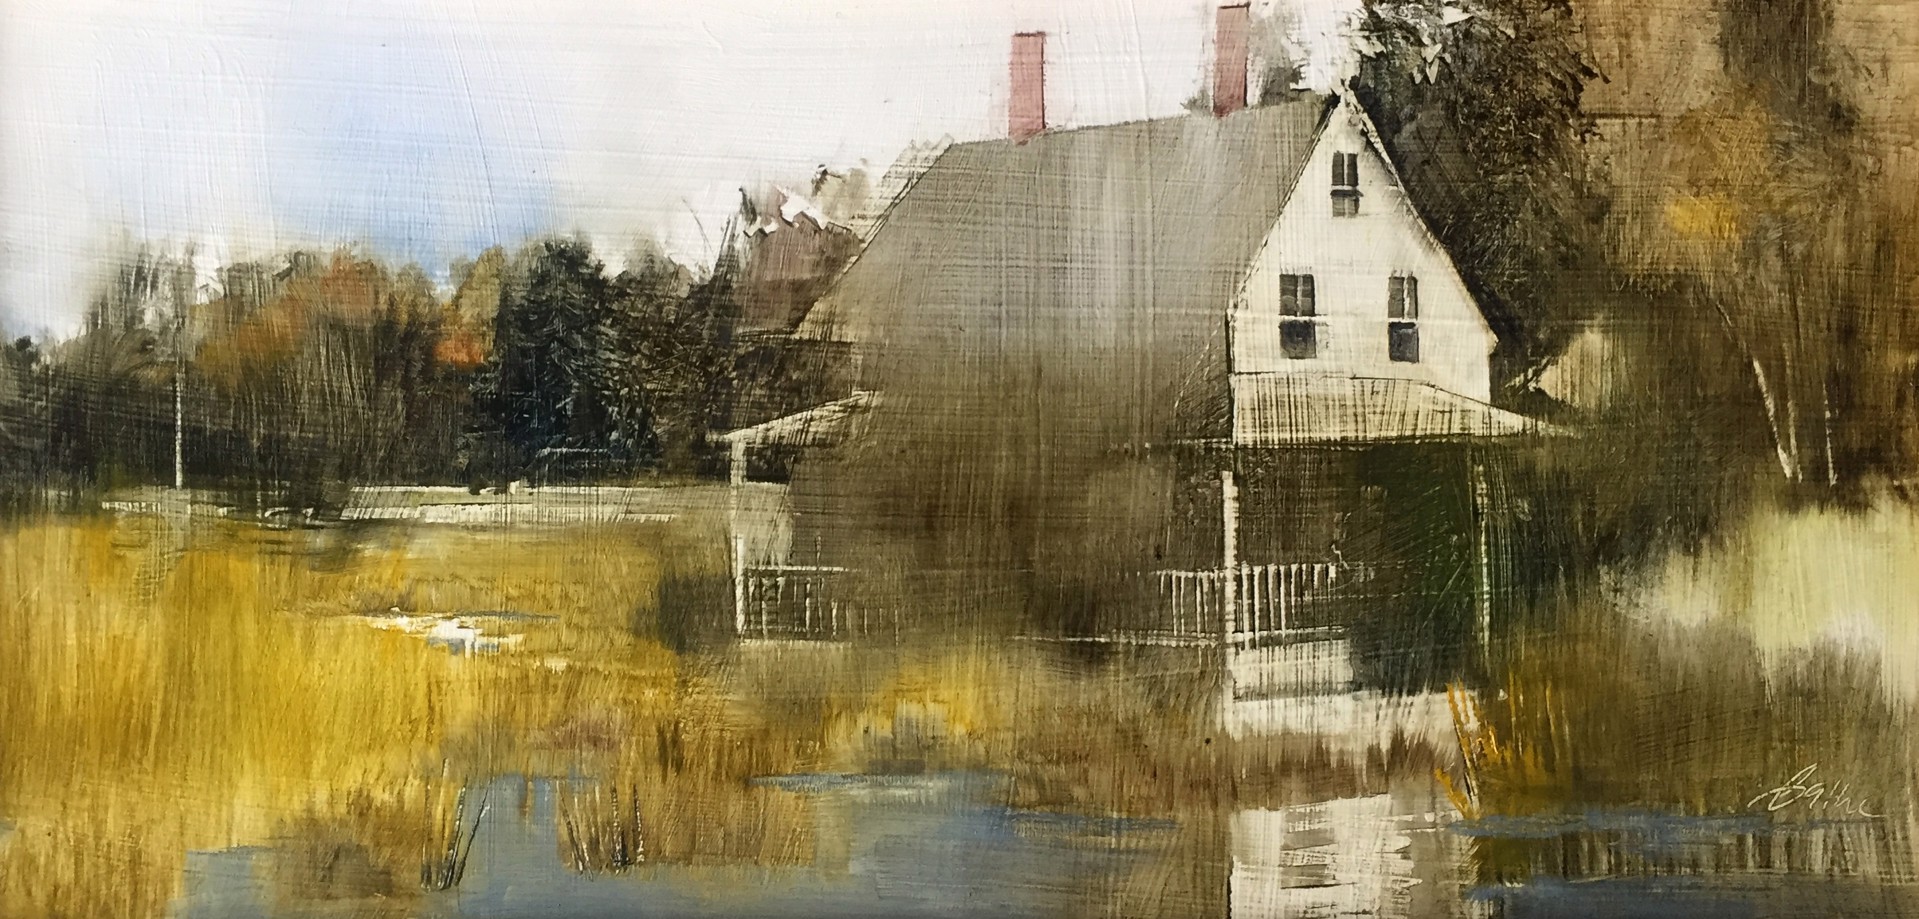 House on the Marsh, Essex by Beth Bathe